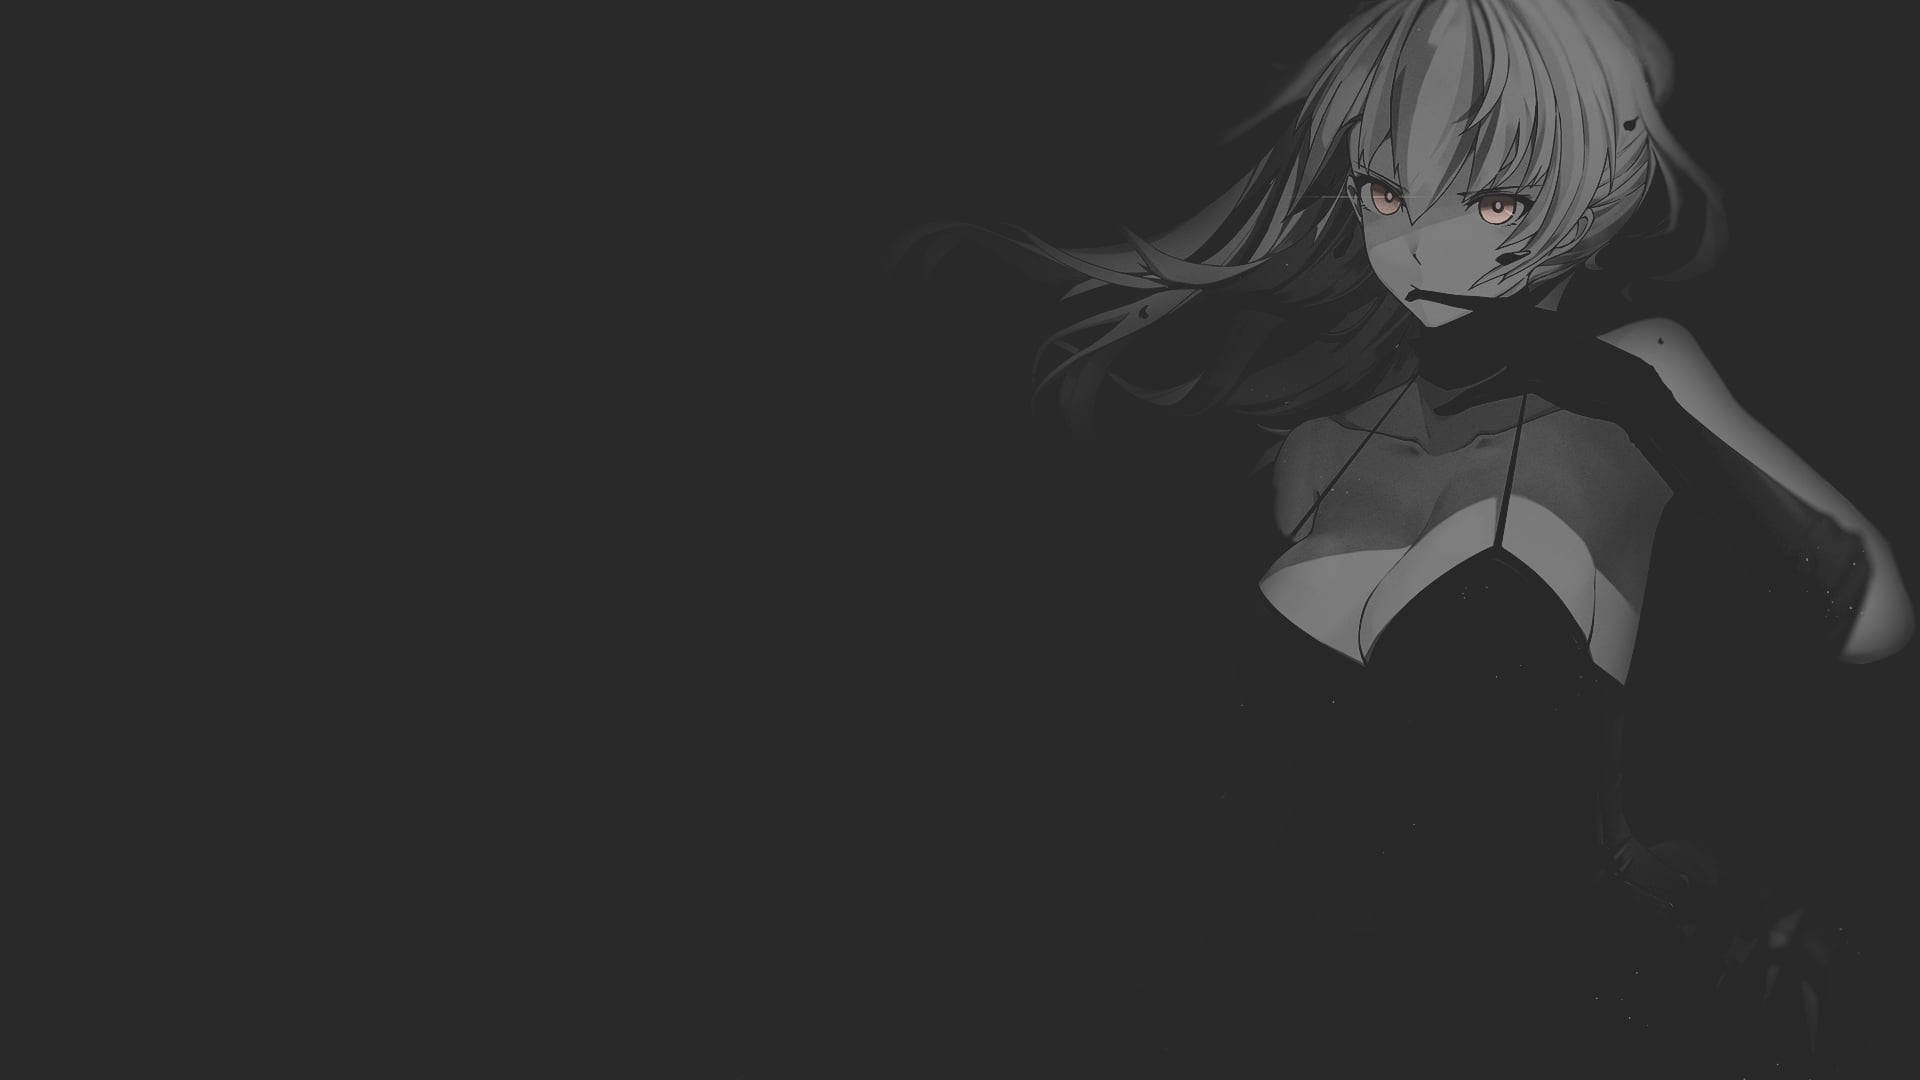 Download Fate Stay Night Dark Anime Aesthetic Desktop Wallpaper